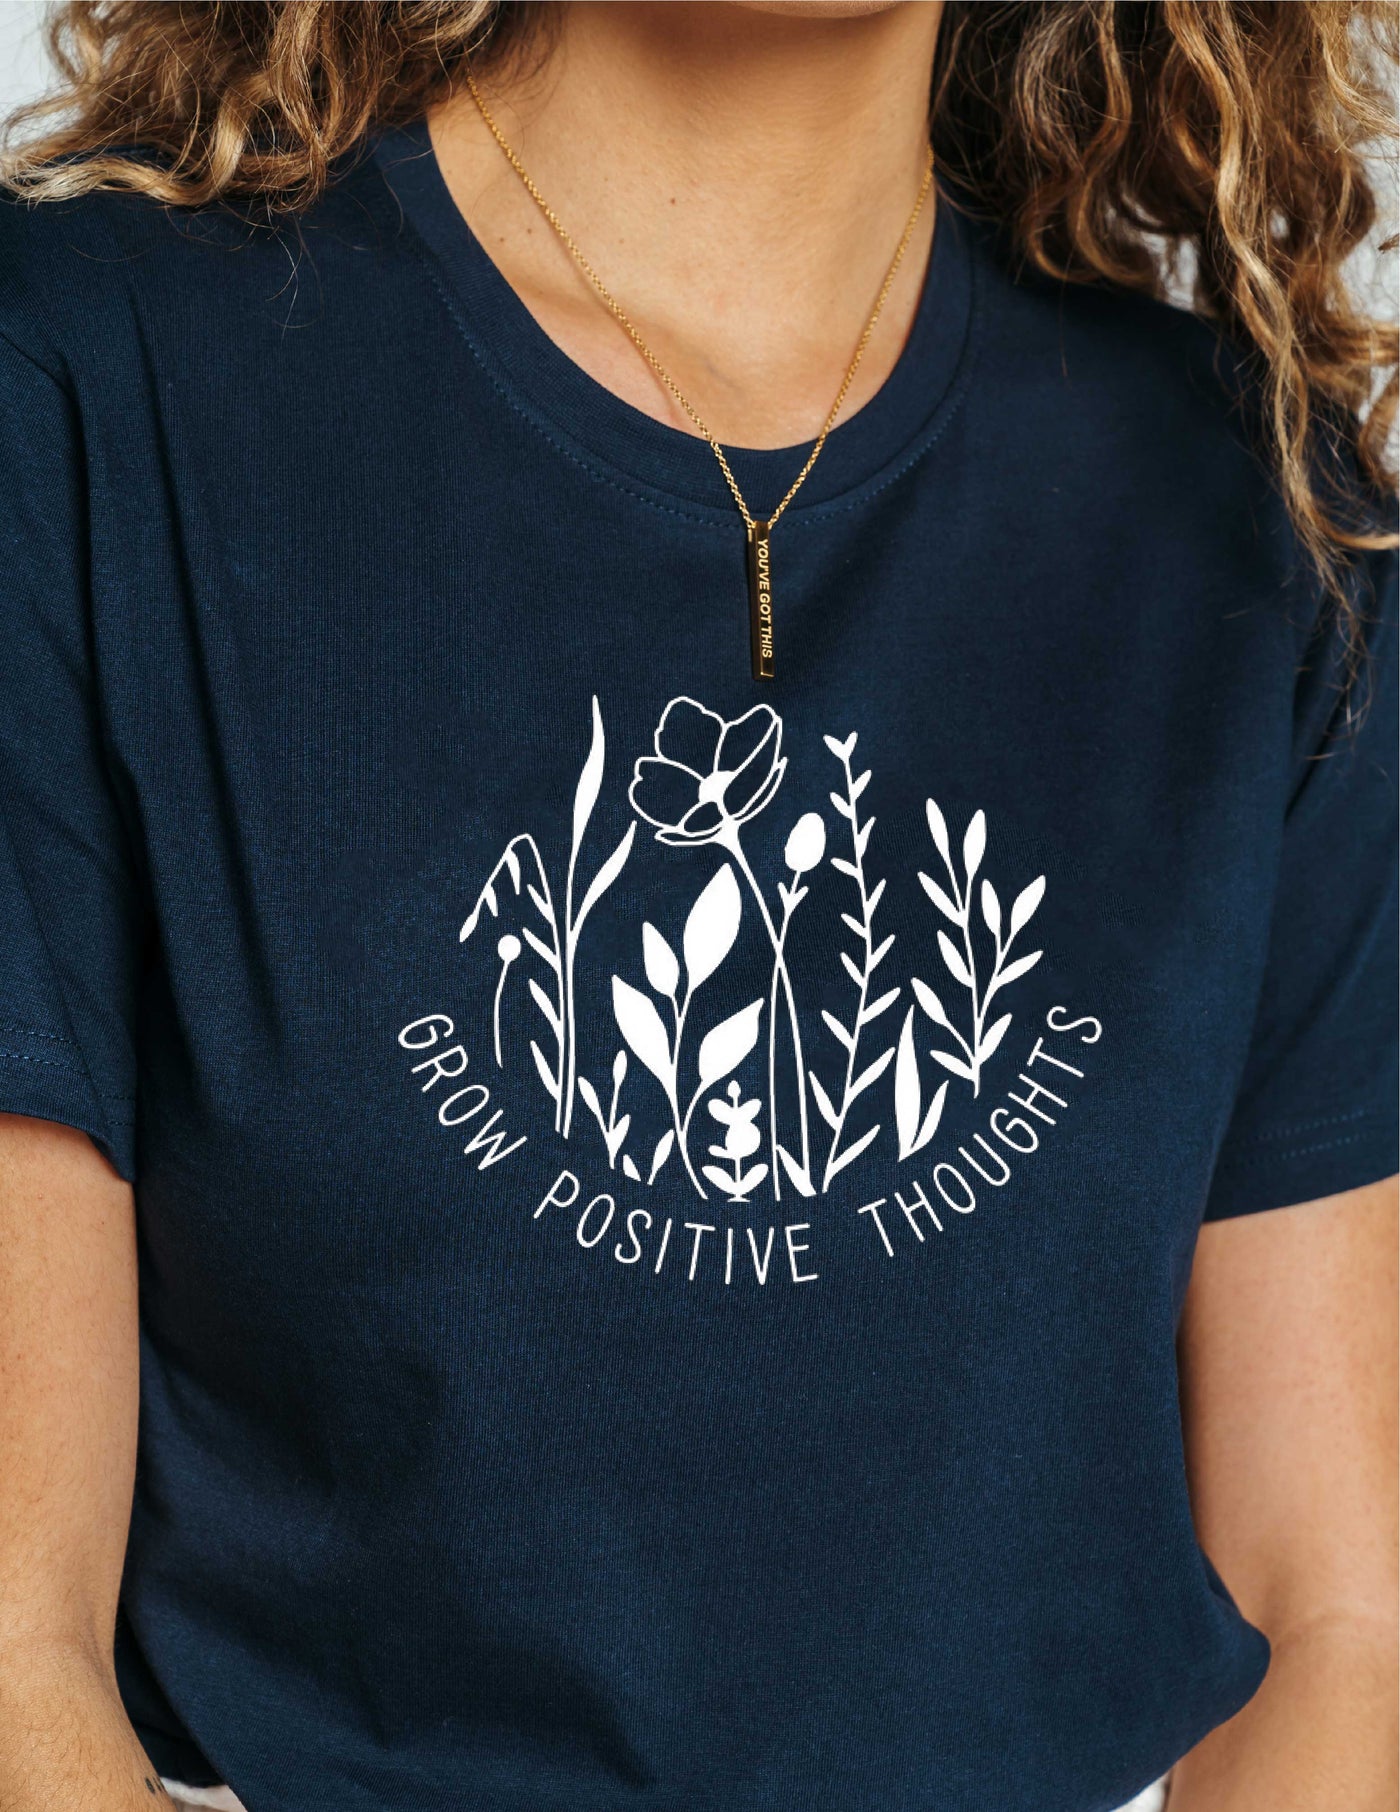 Positive Thoughts T-Shirt Navy Shirts Selfawear 